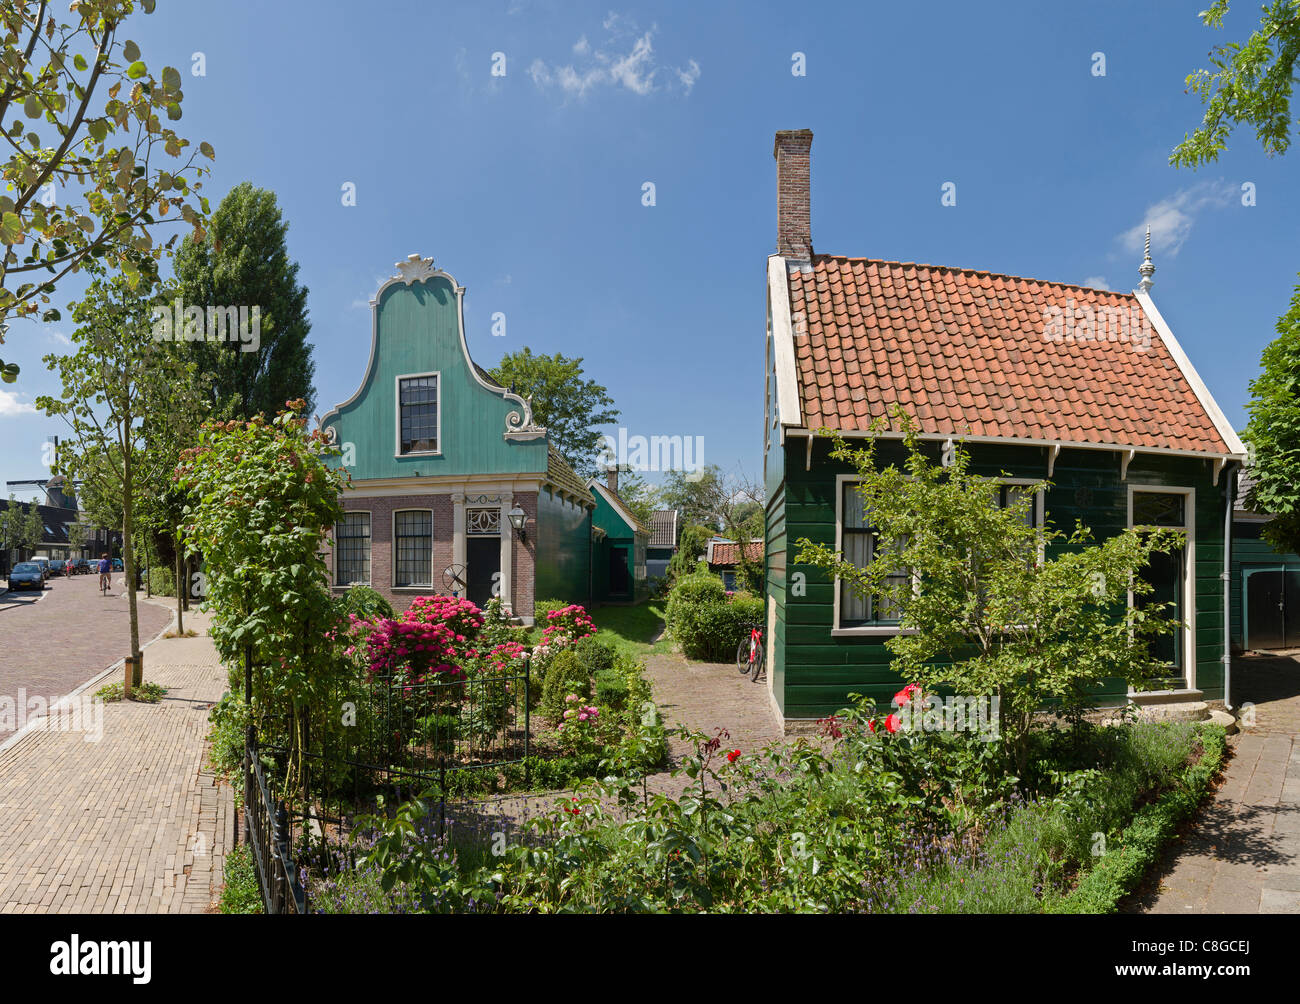 Netherlands, Europe, Holland, Zaandijk, Wooden houses with garden, city, village, flowers, summer, garden, Stock Photo